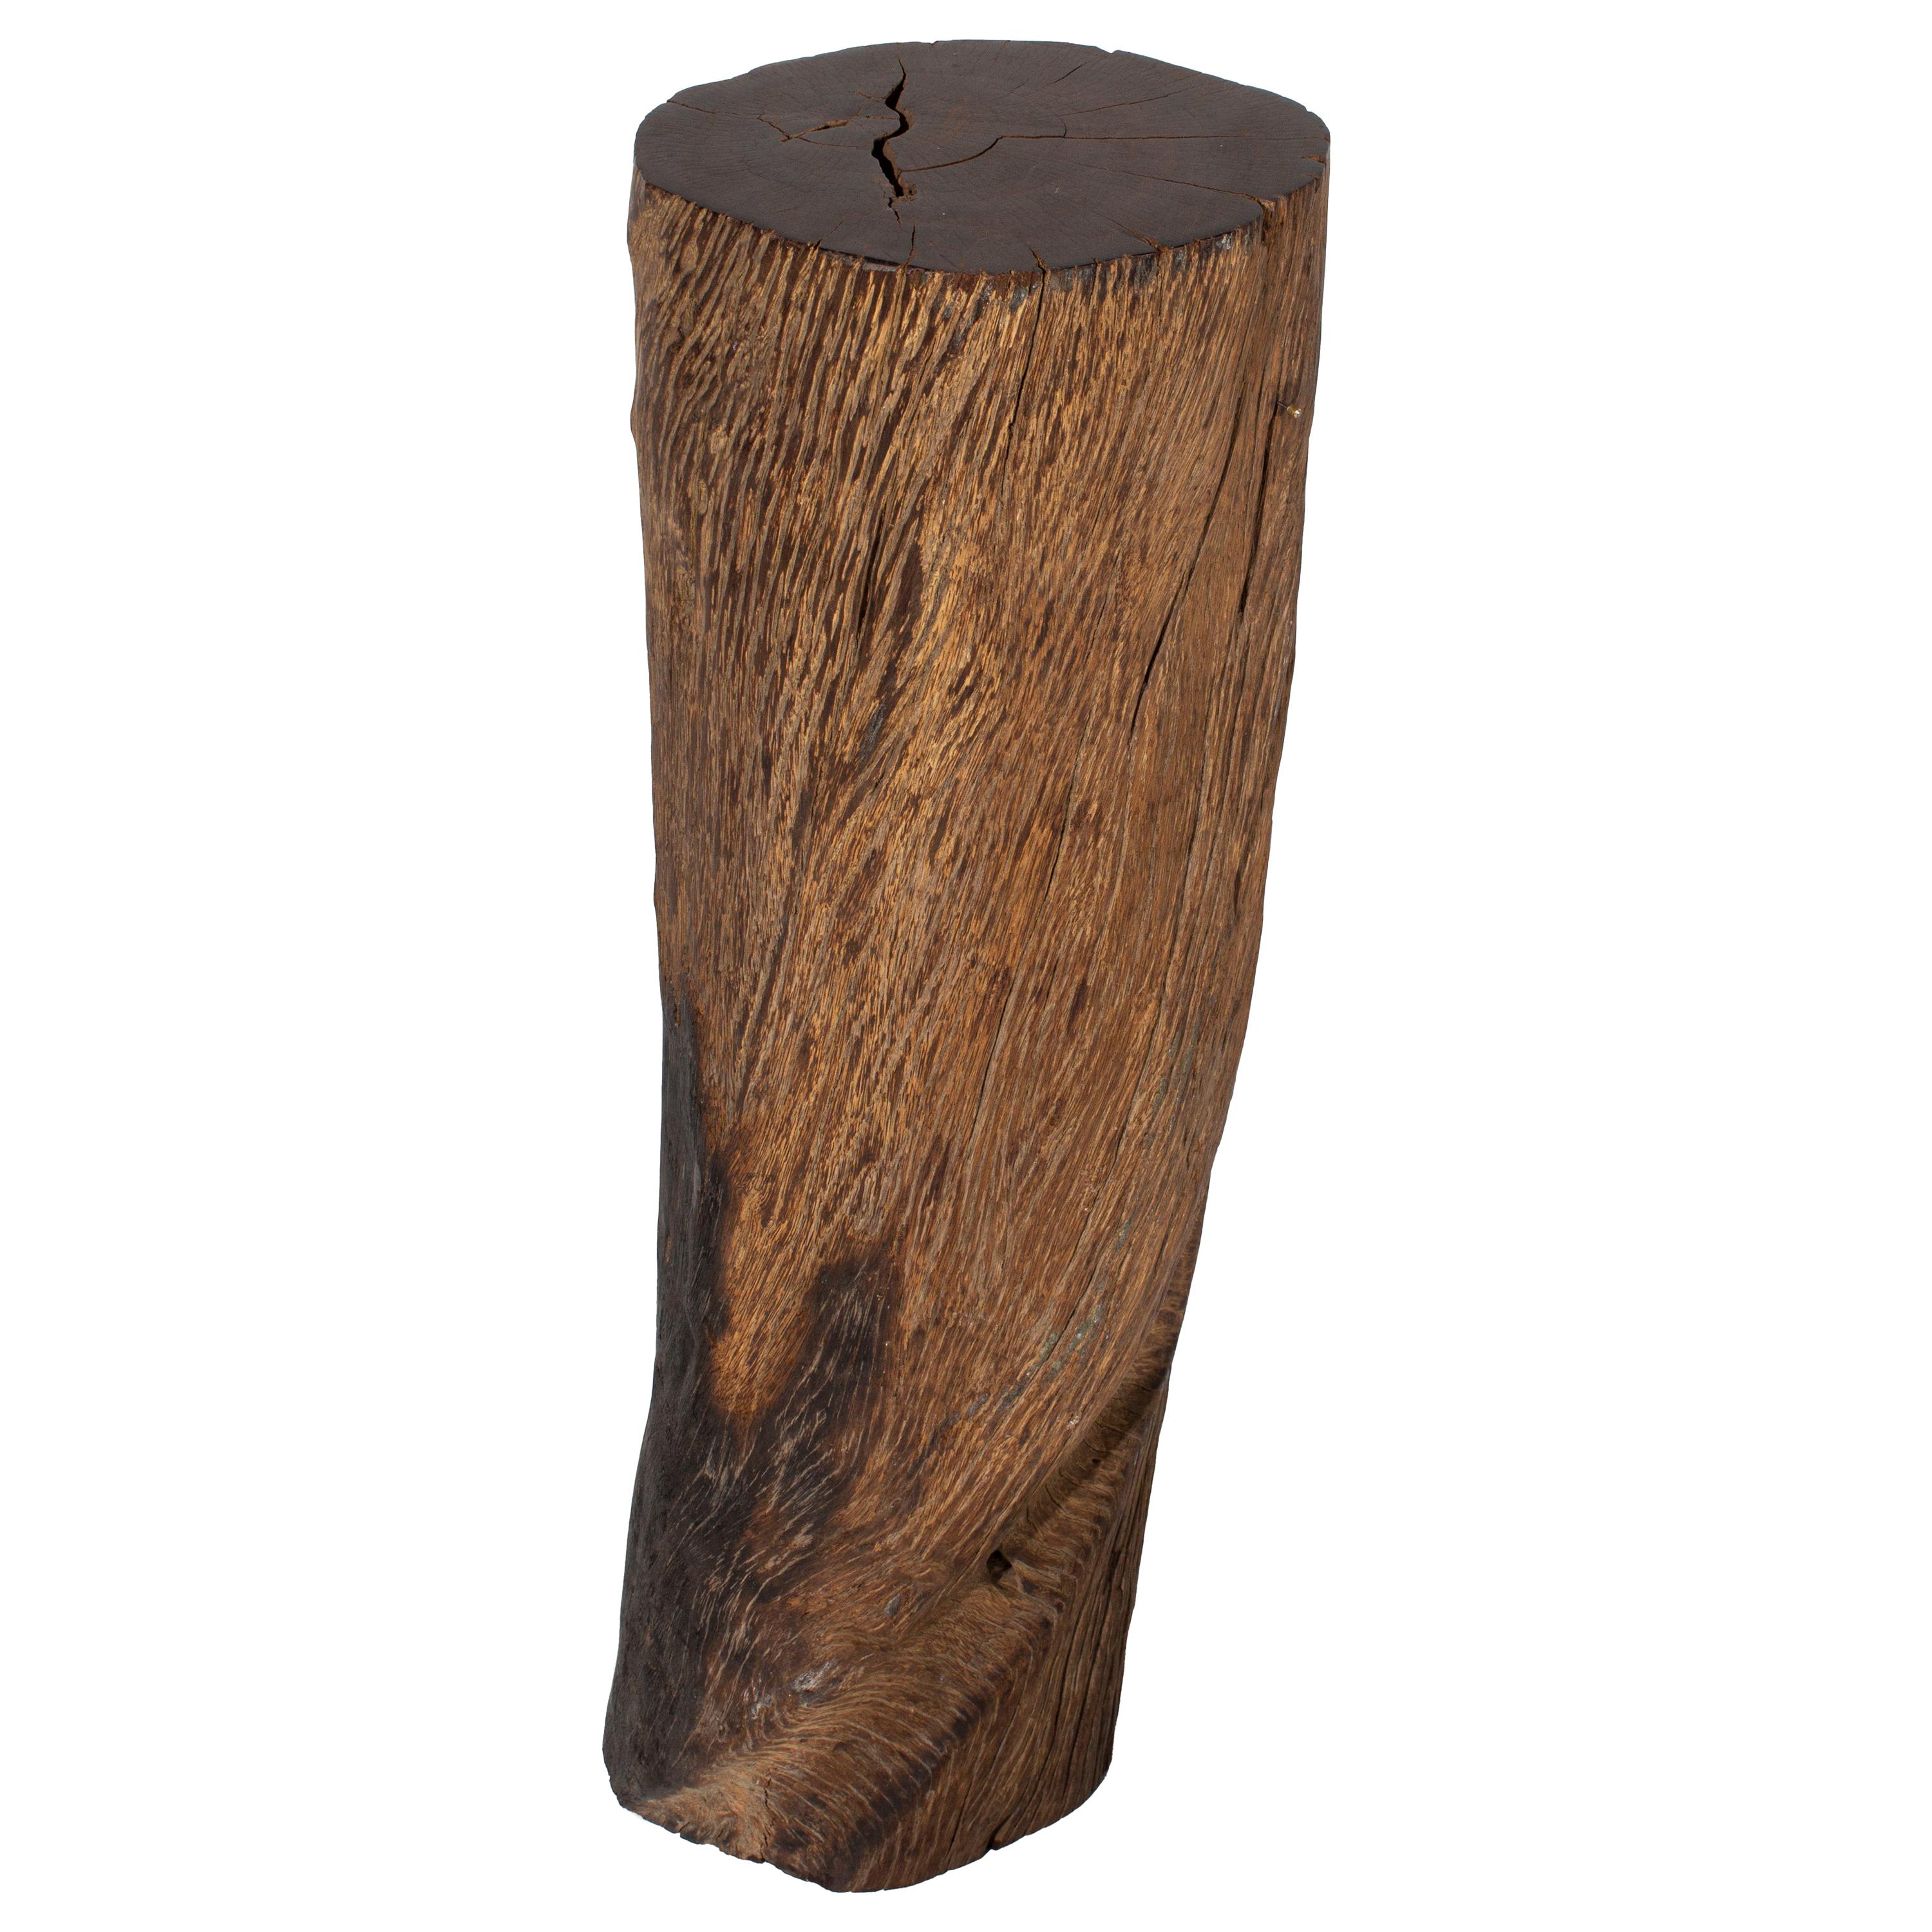 Organic Lychee Wood Stump Side Table